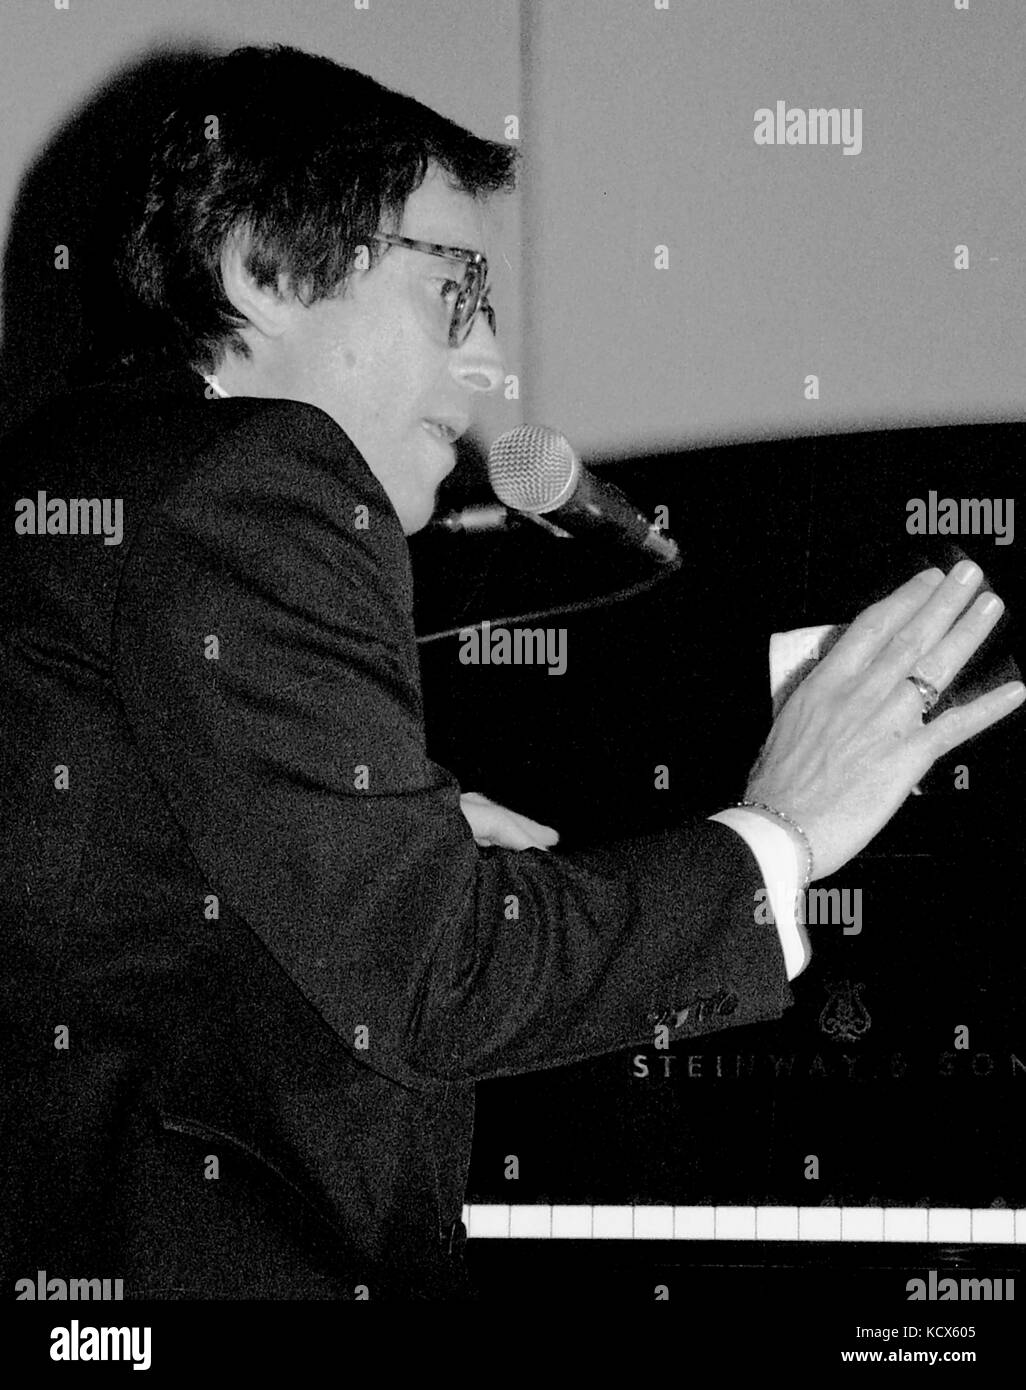 Stephen Schlaks in concert, Alessandria (Italy), 1981 Stock Photo